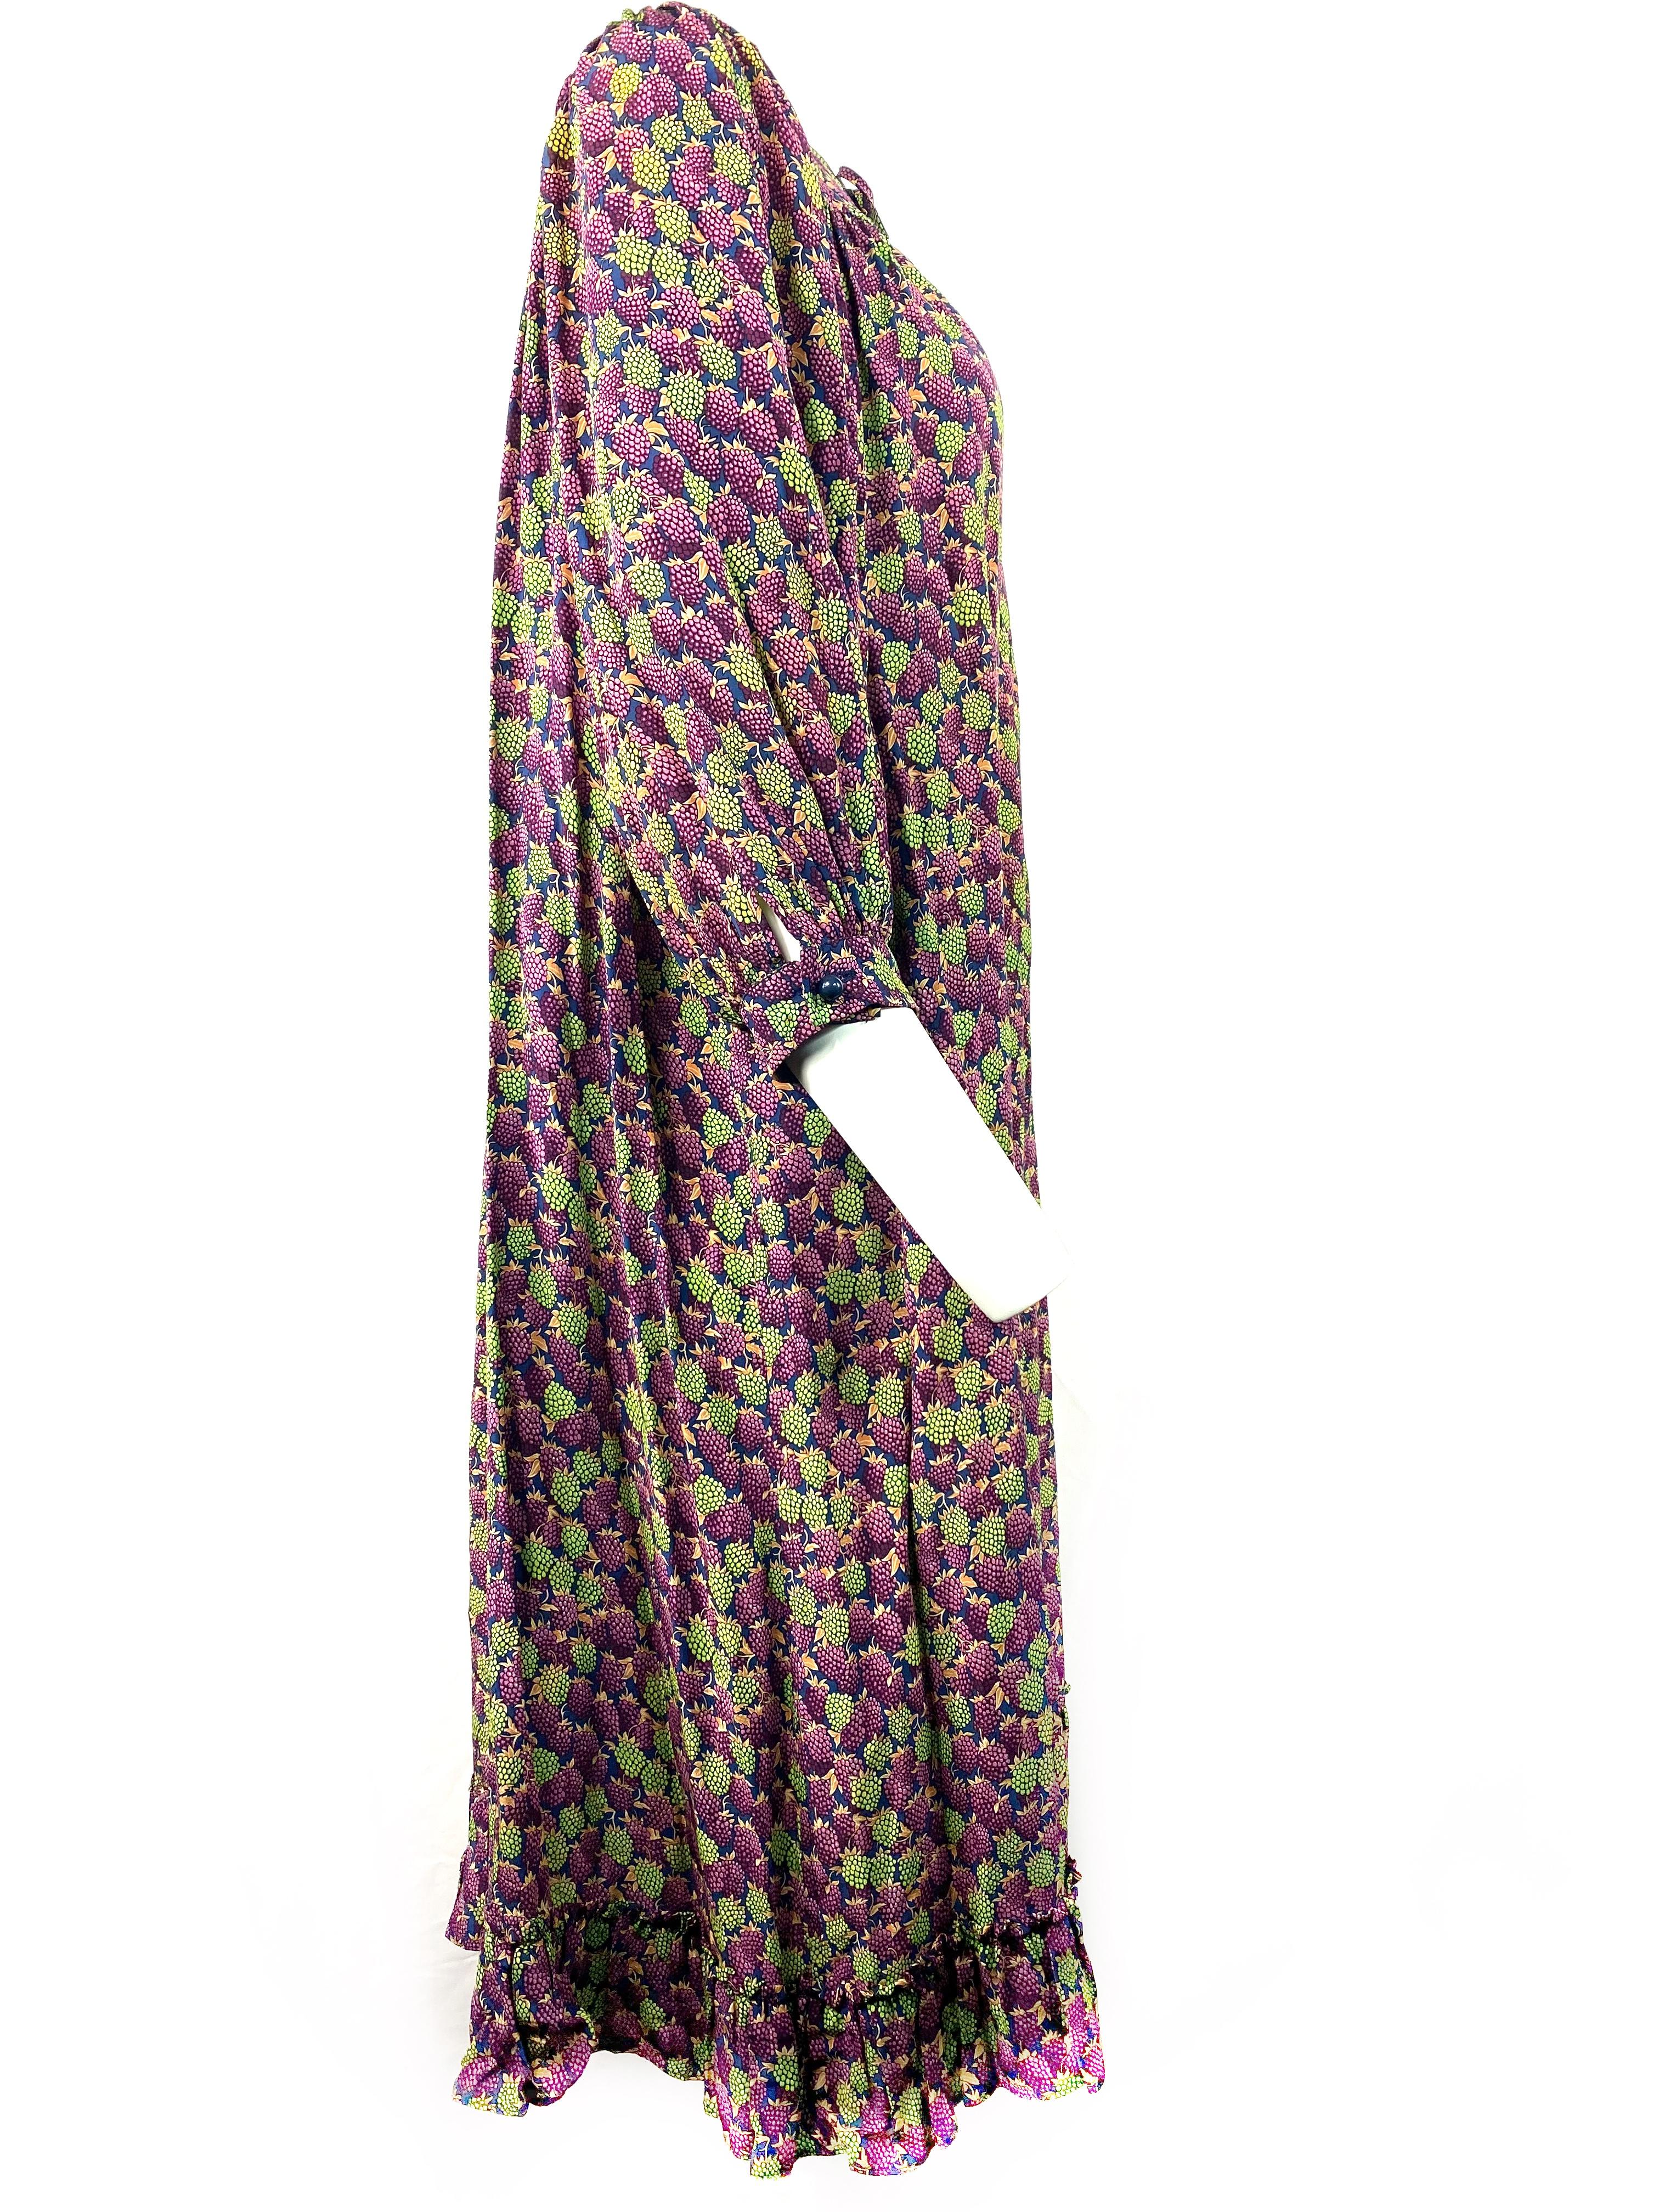 Women's Emanuel Ungaro Parallele Paris Multi Color Raspberry Print Dress